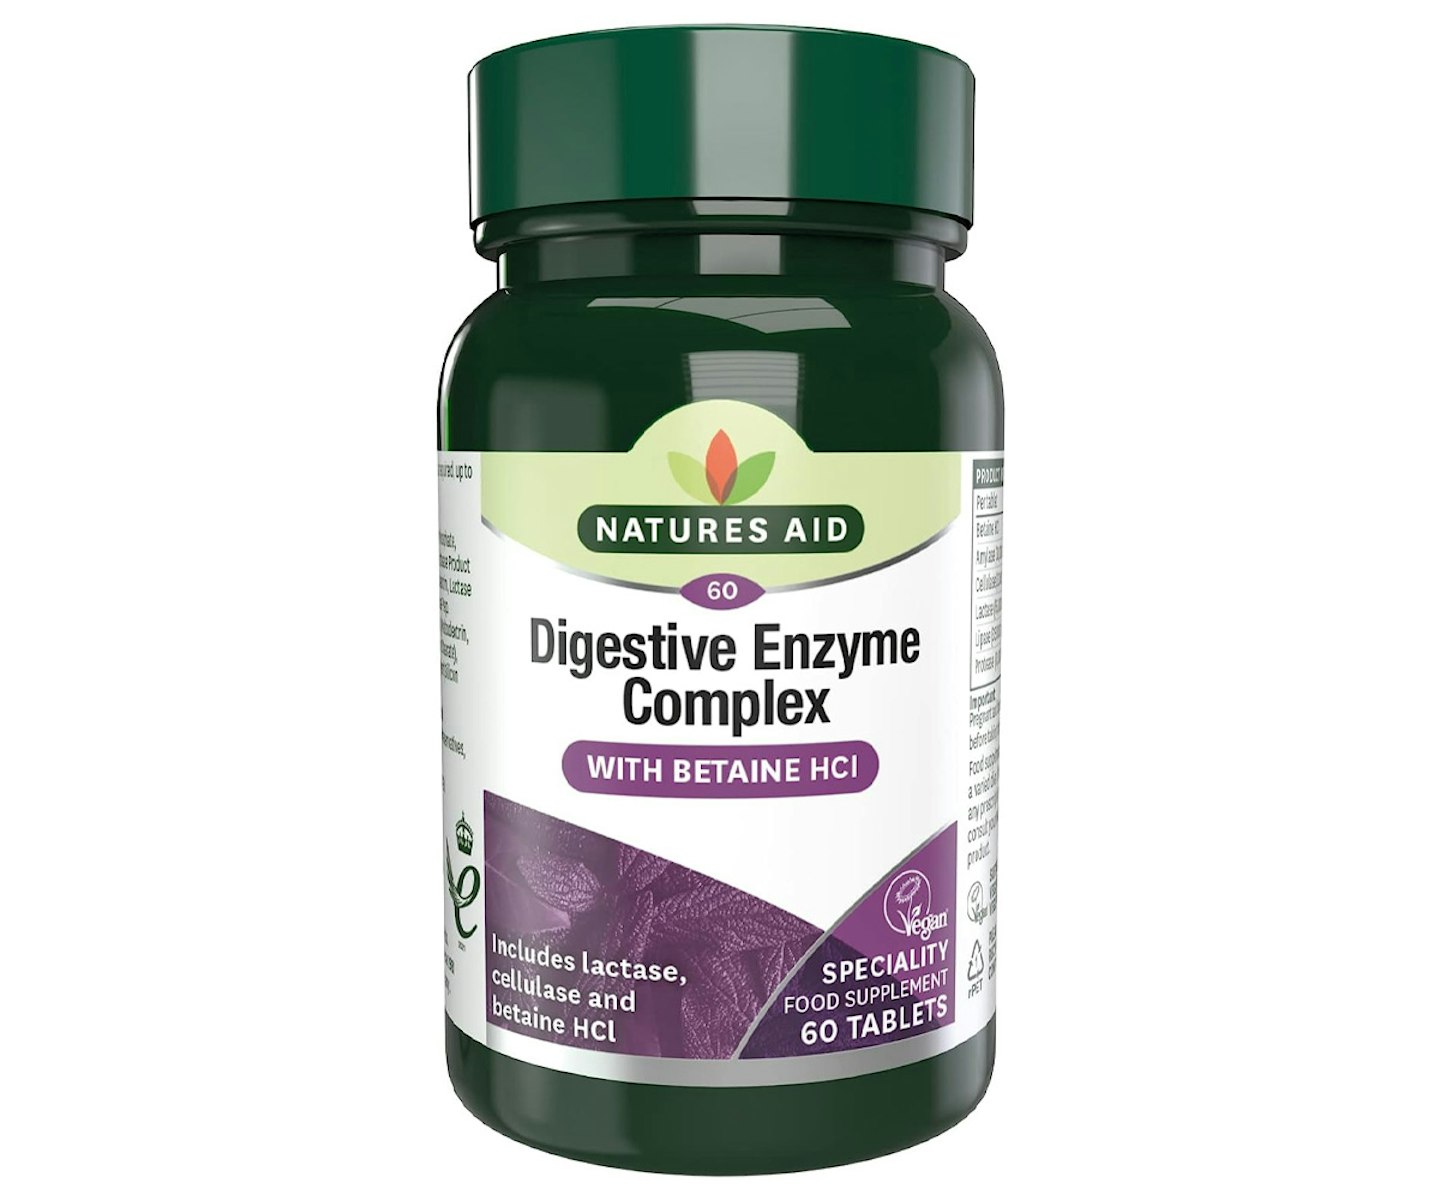 DIgestive enzymes